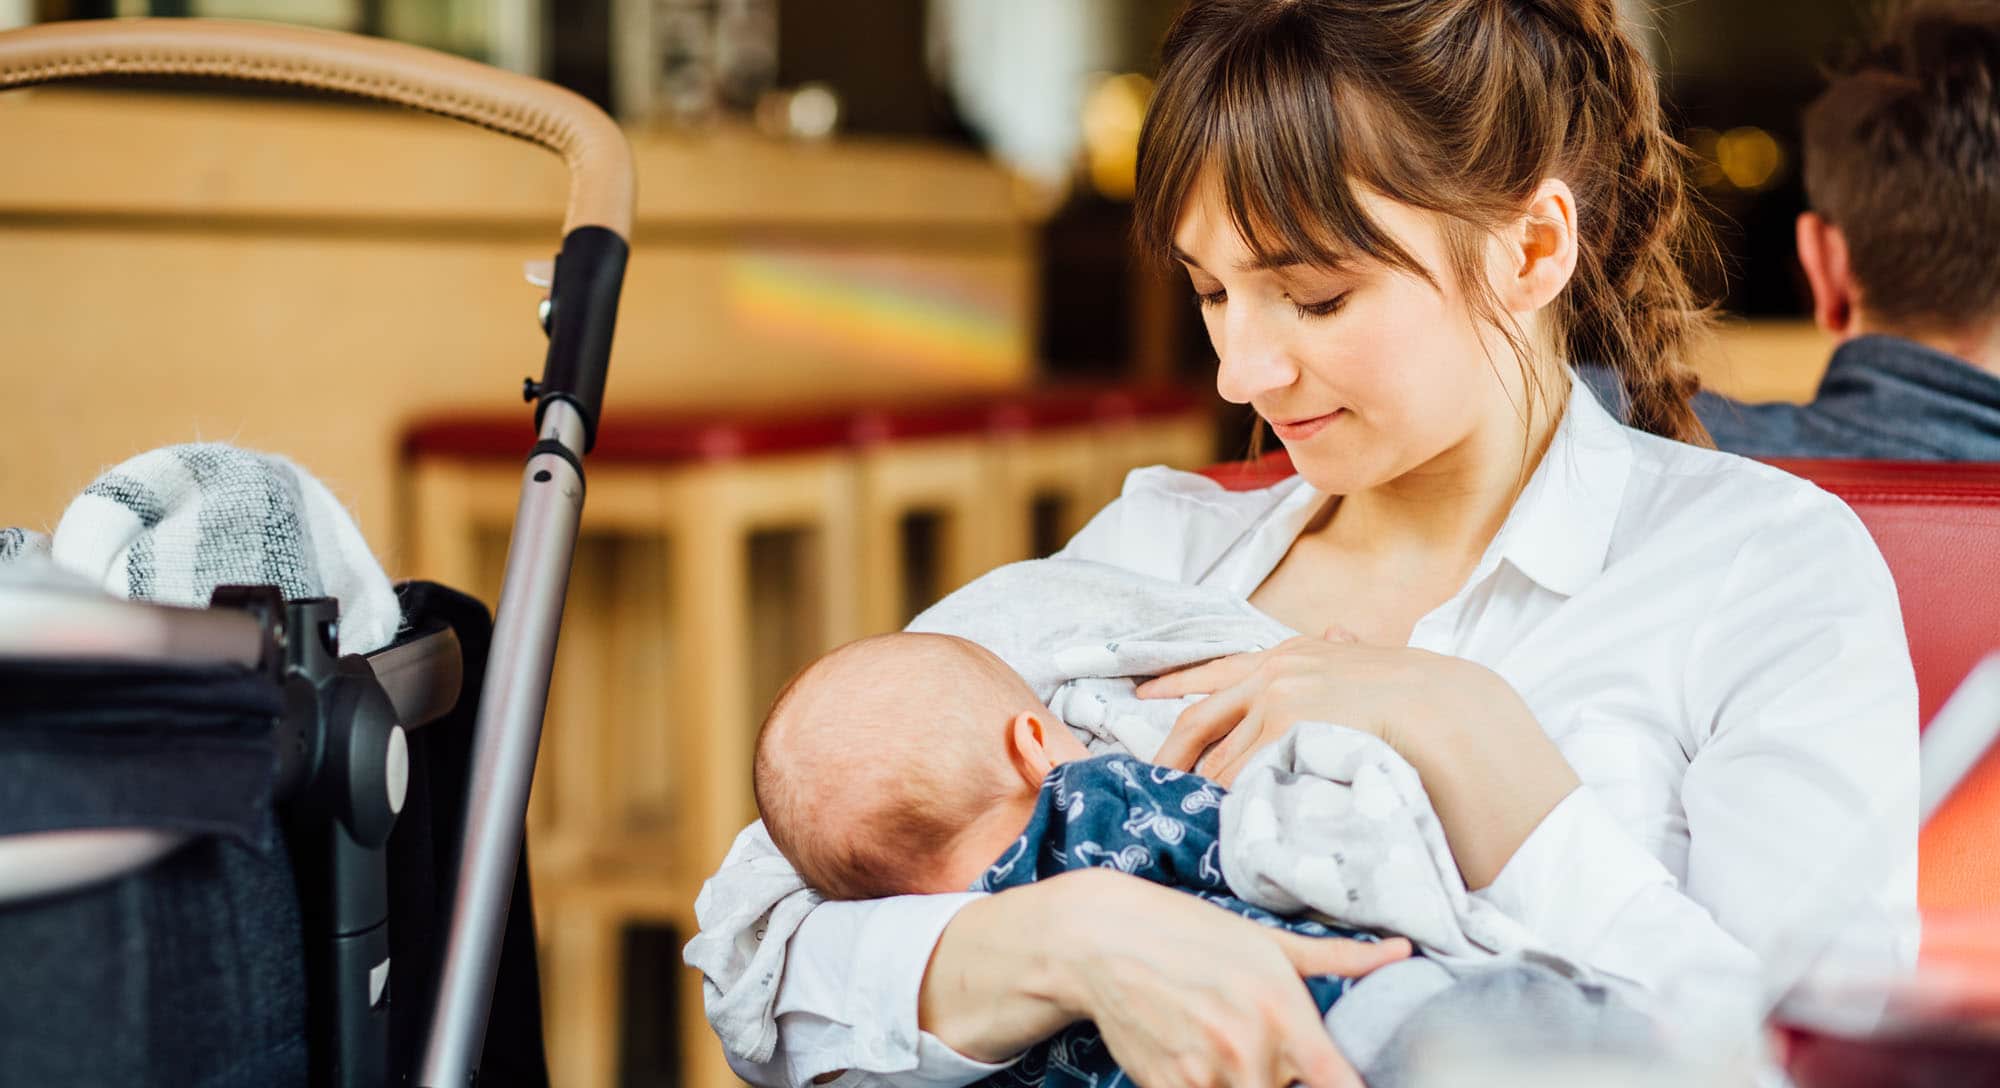 breastfeeding - The 17 Secrets of Breastfeeding Every New Mom Should Know